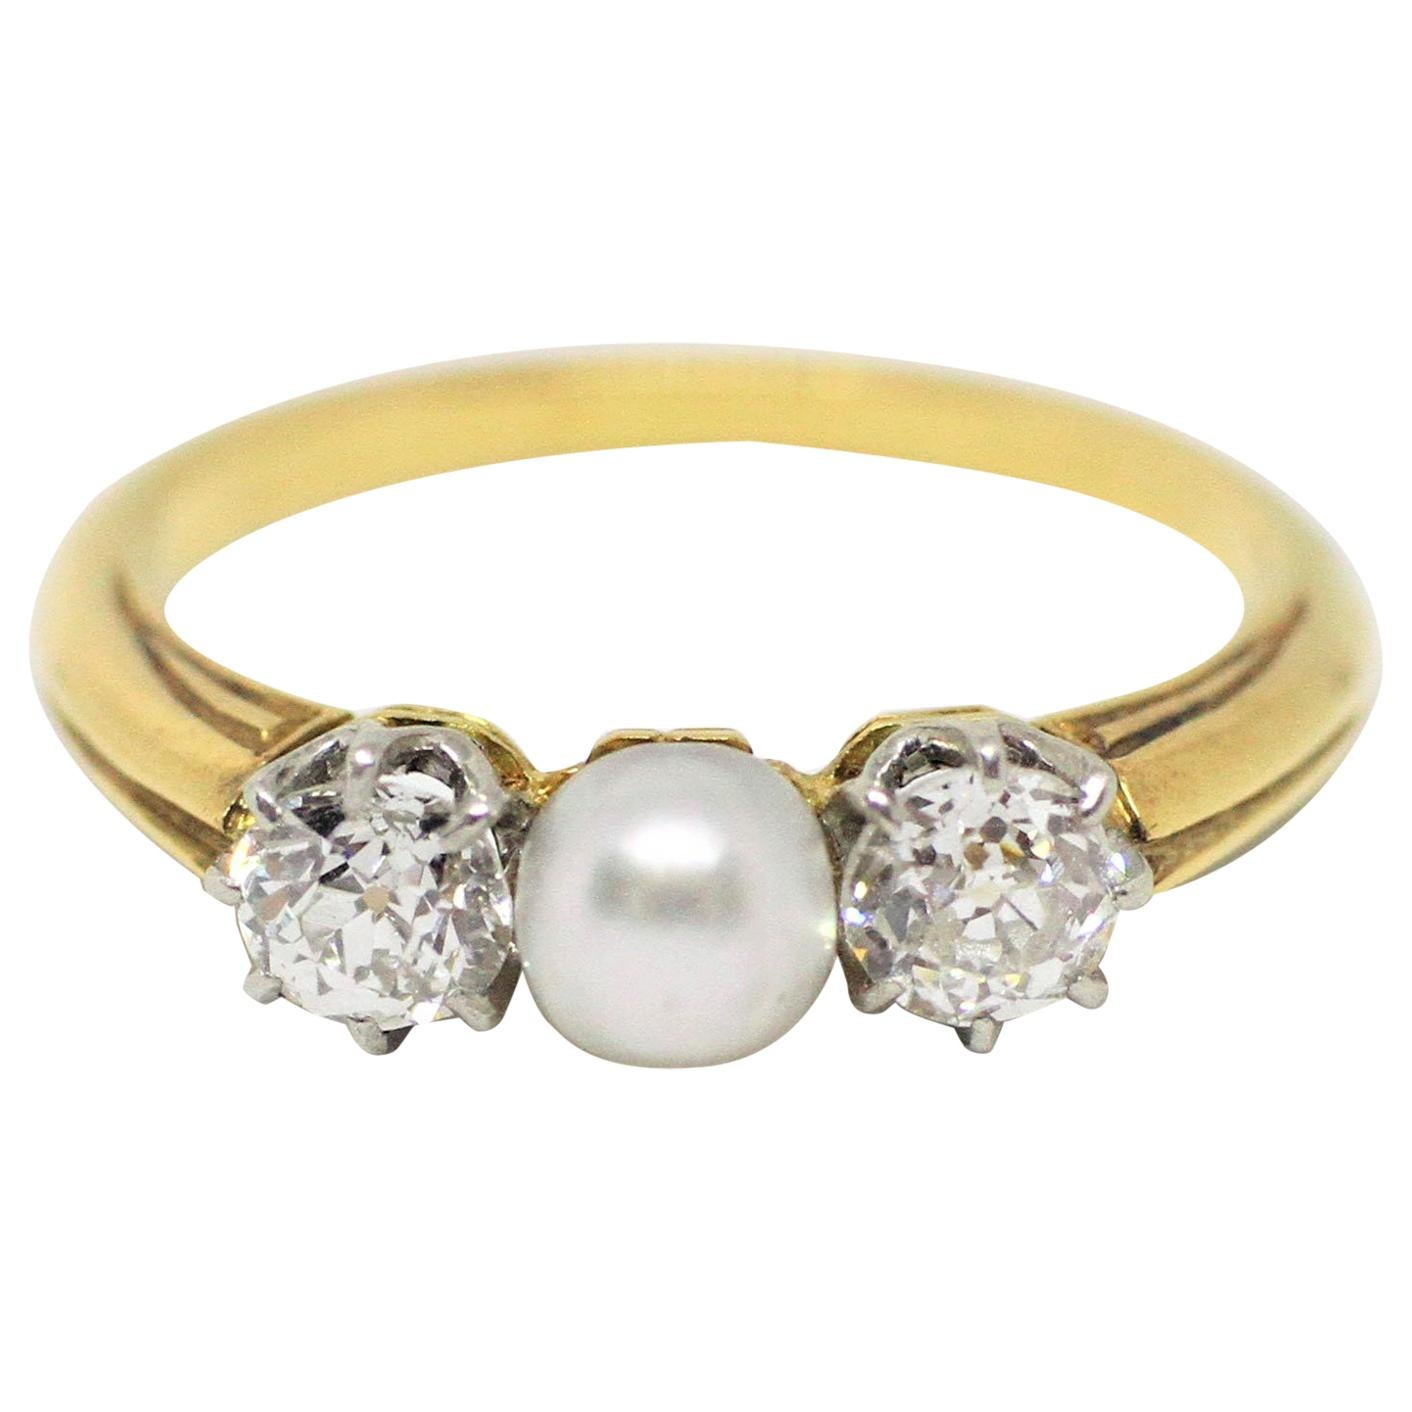 Antique Three-Stone Pearl and Diamond Ring, circa 1910